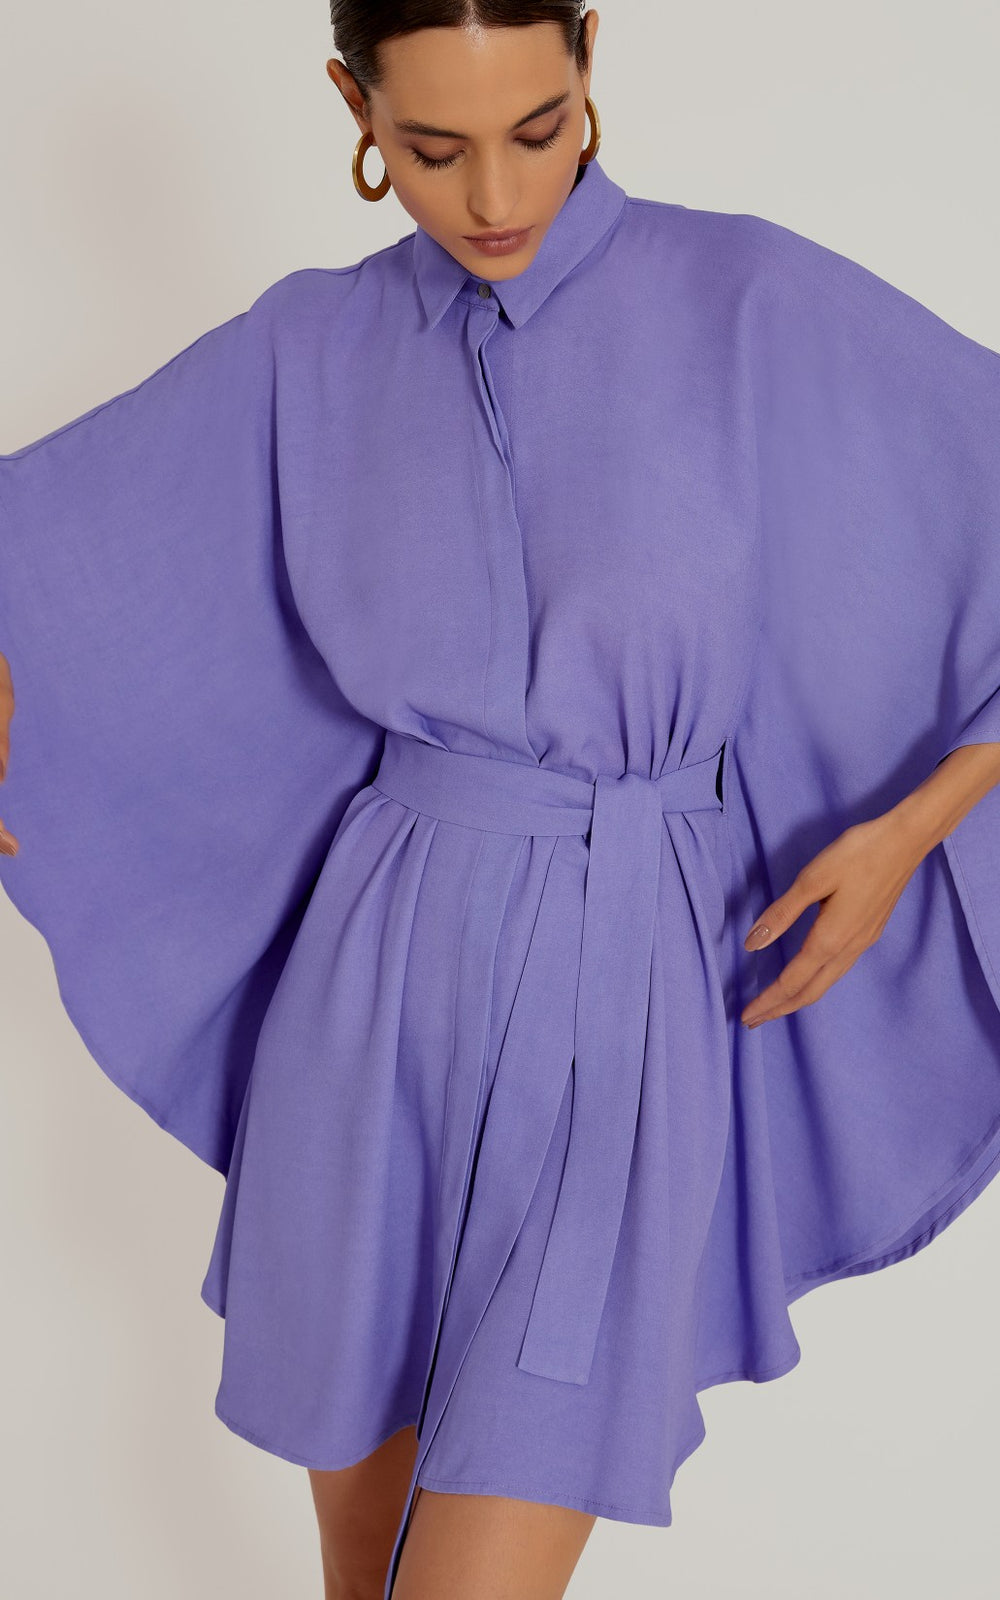 Lenny Niemeyer Short Shirt Dress in Lavender